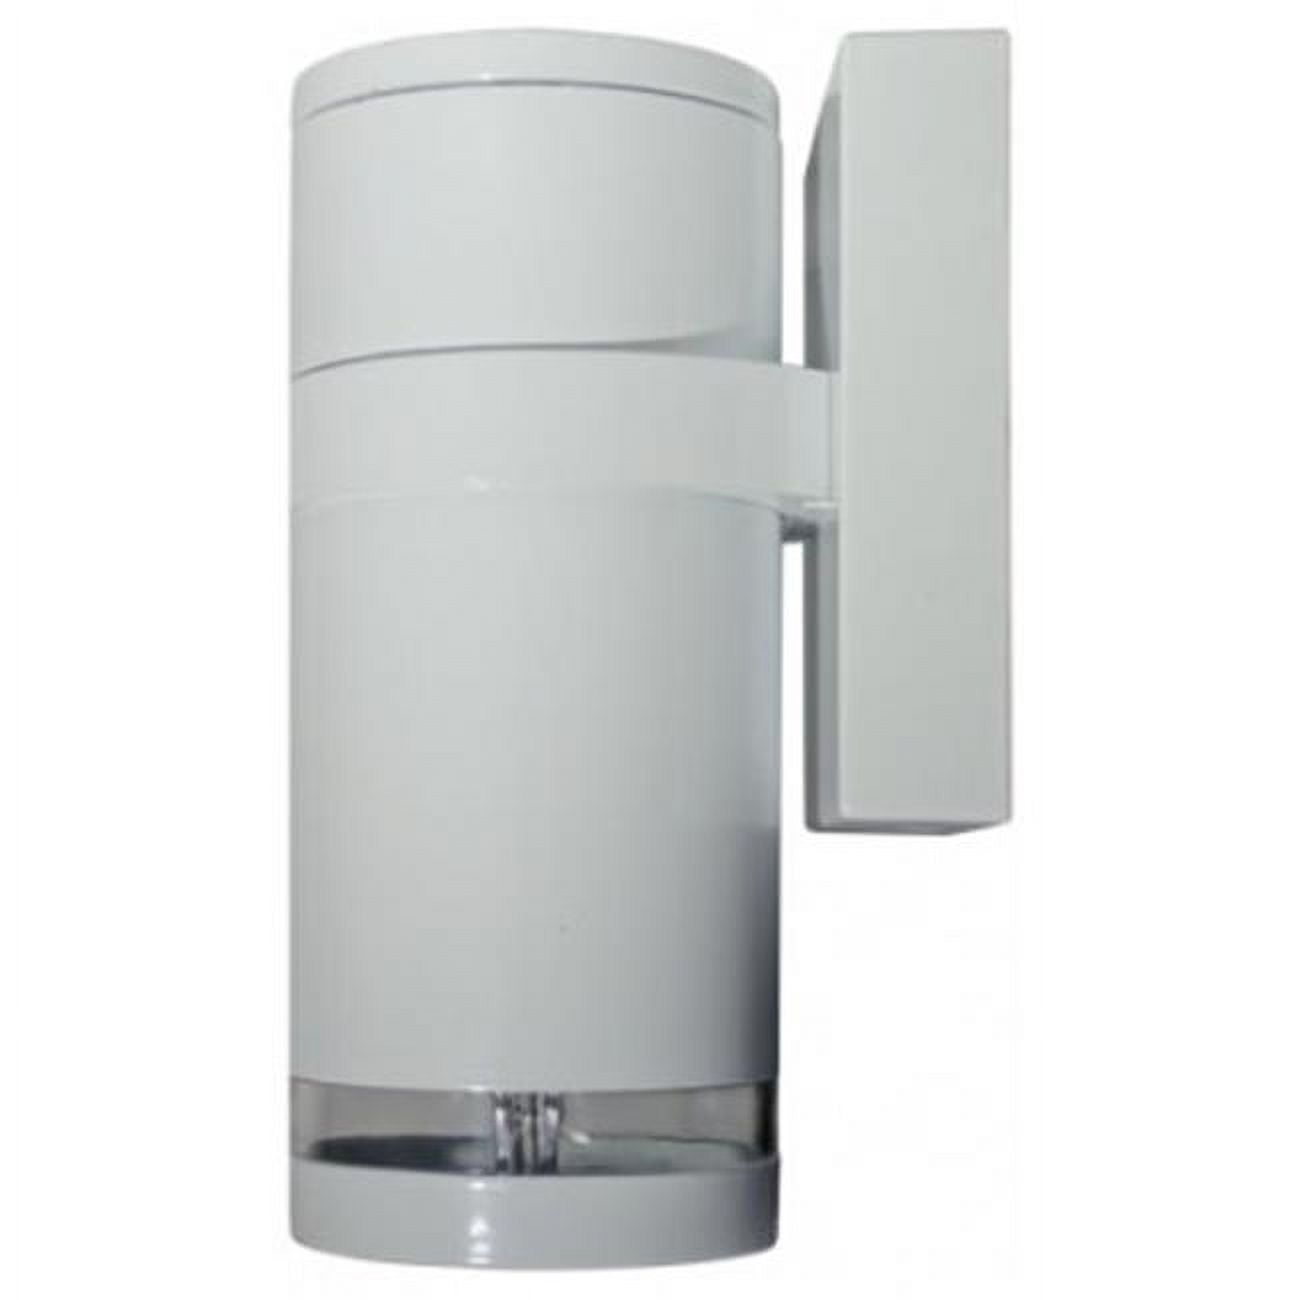 Dw3552-w Powder Coated Cast Aluminum Down Light Wall Fixture, White - 9.22 X 3.94 X 5.55 In.